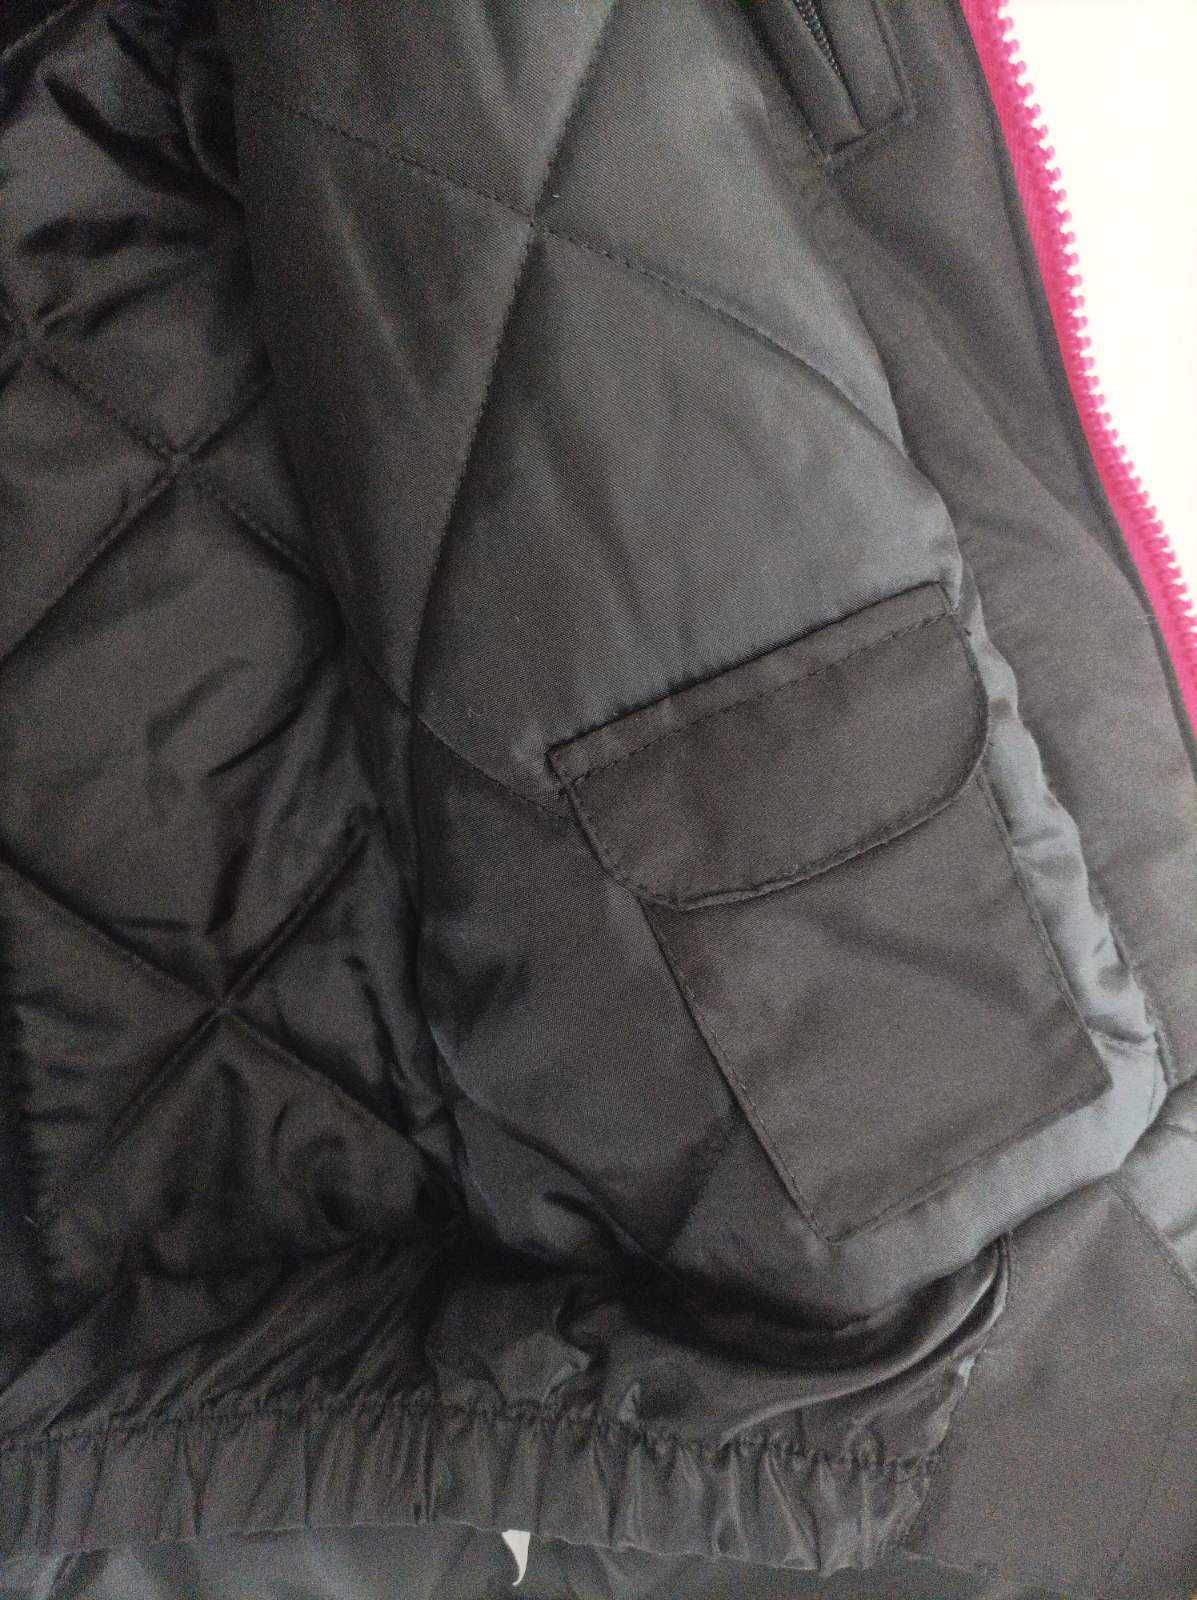 Новая зимняя термо куртка курточка лыжная